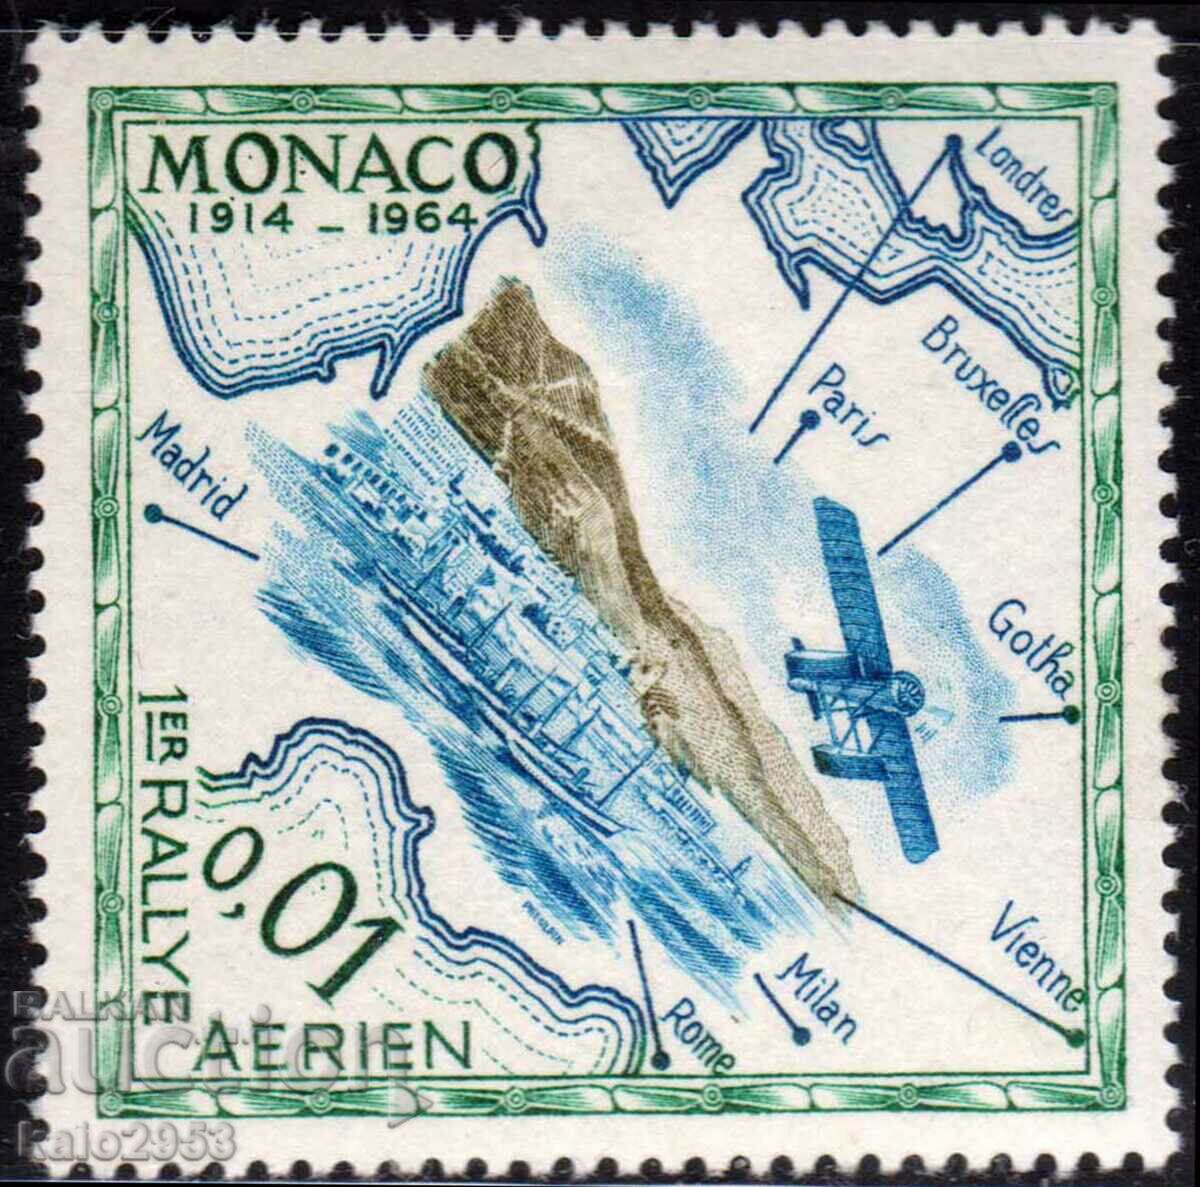 Monaco-1964-50 years Monte Carlo air rally, MLH